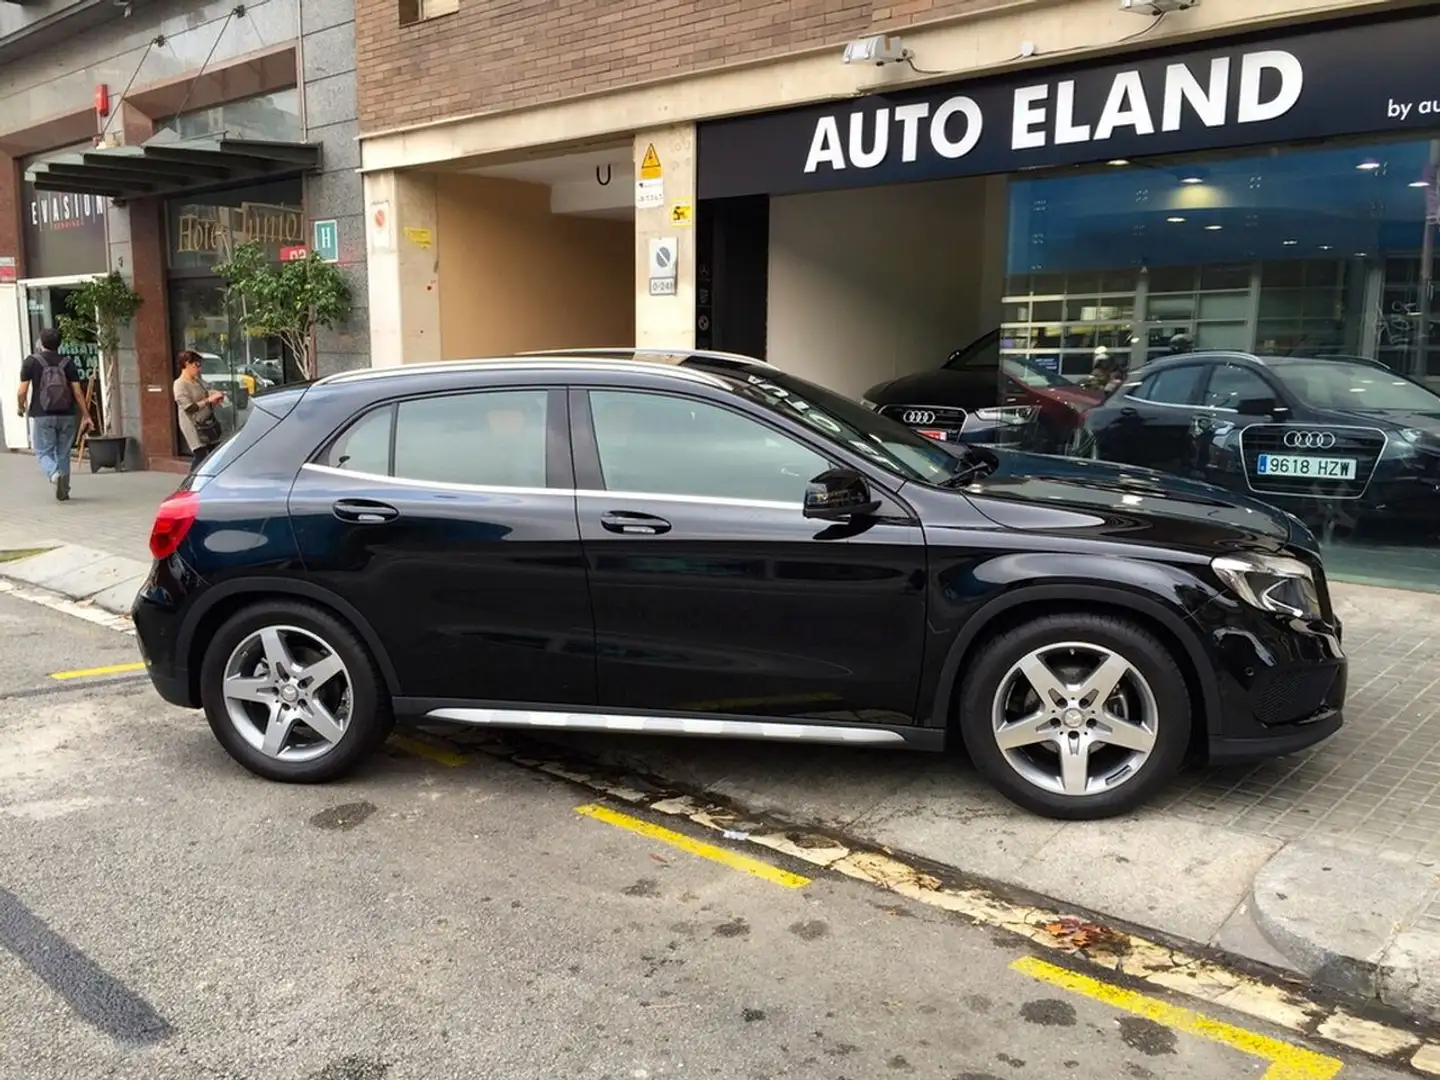 Mercedes-Benz GLA 200 SUV/4x4/Pickup en Negro ocasión en BARCELONA por €  23.900,-